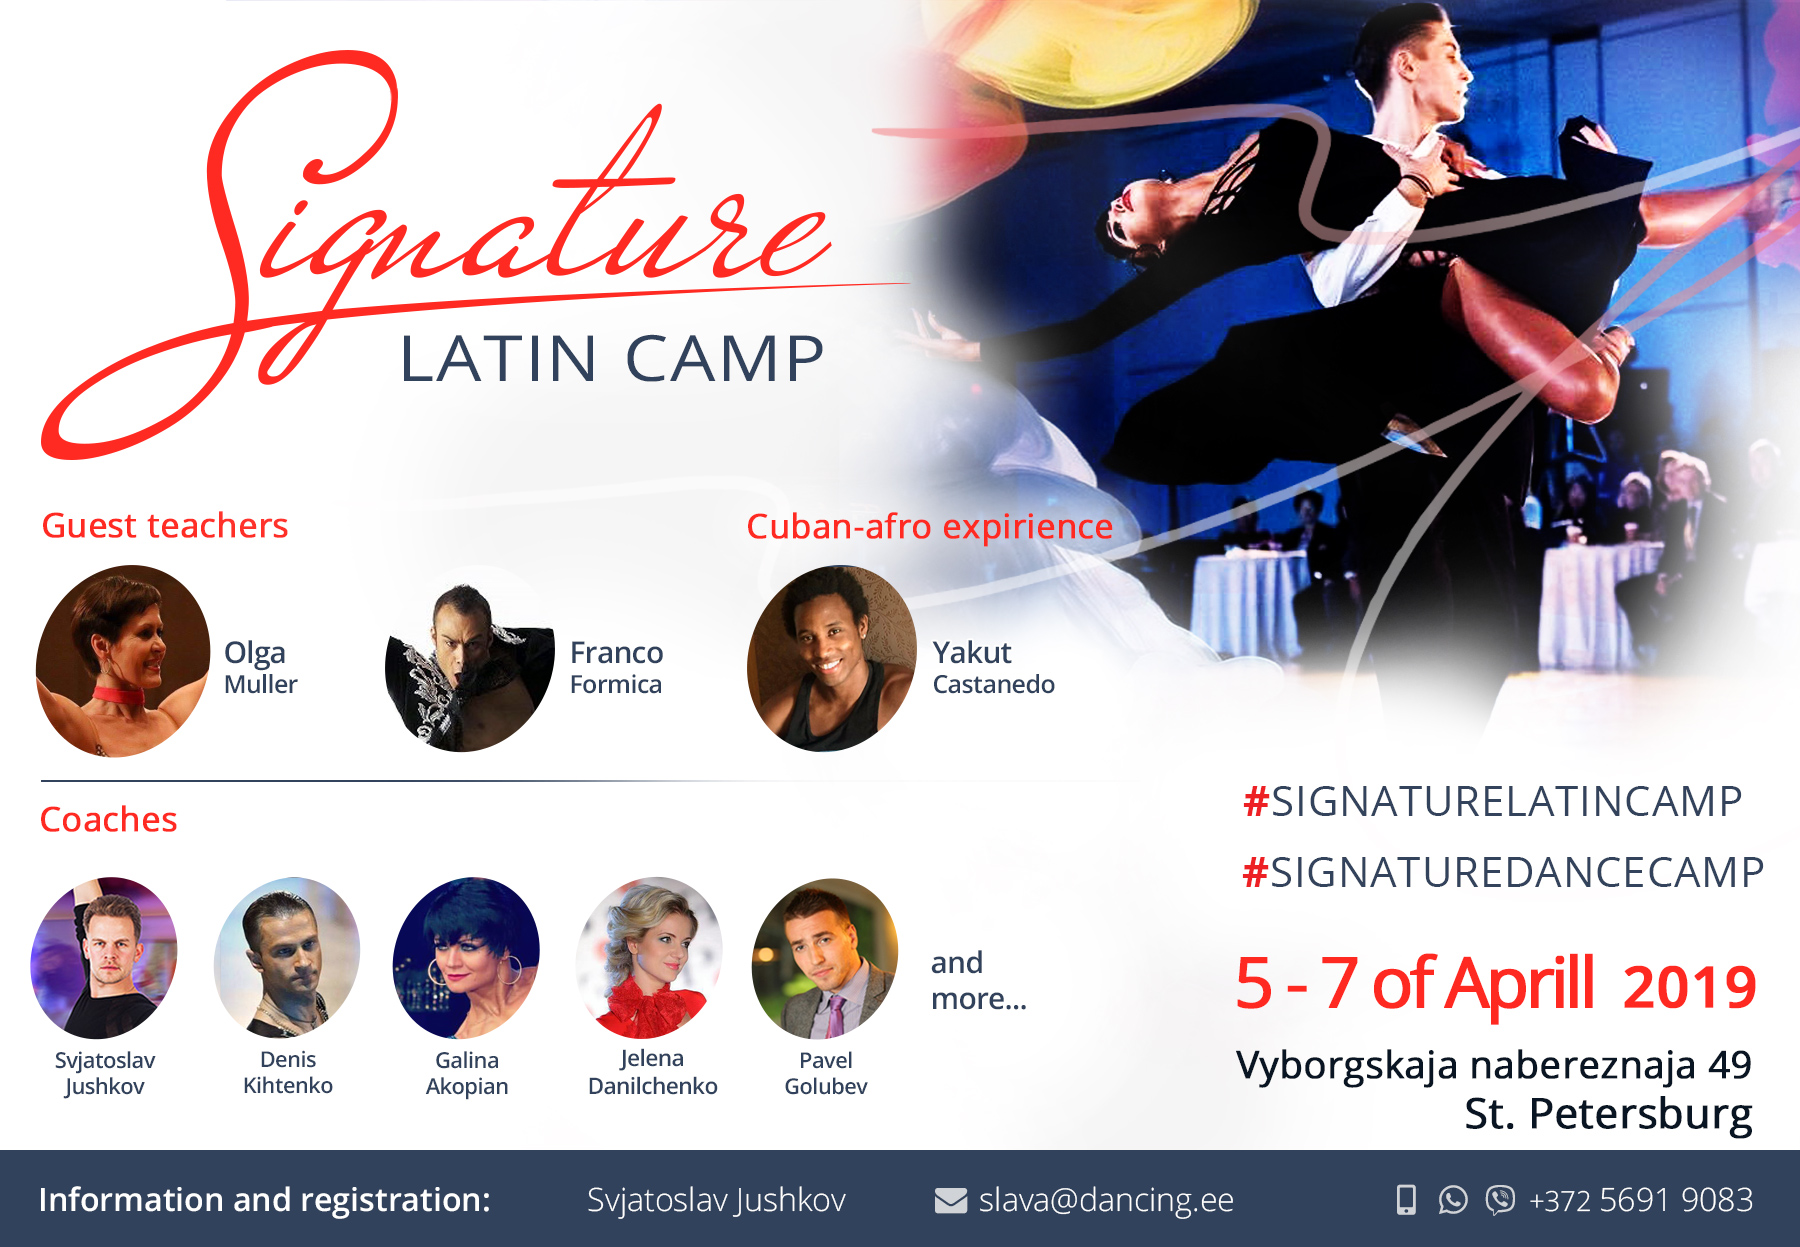 Signature Latin Camp 5 - 7 of Aprill 2019